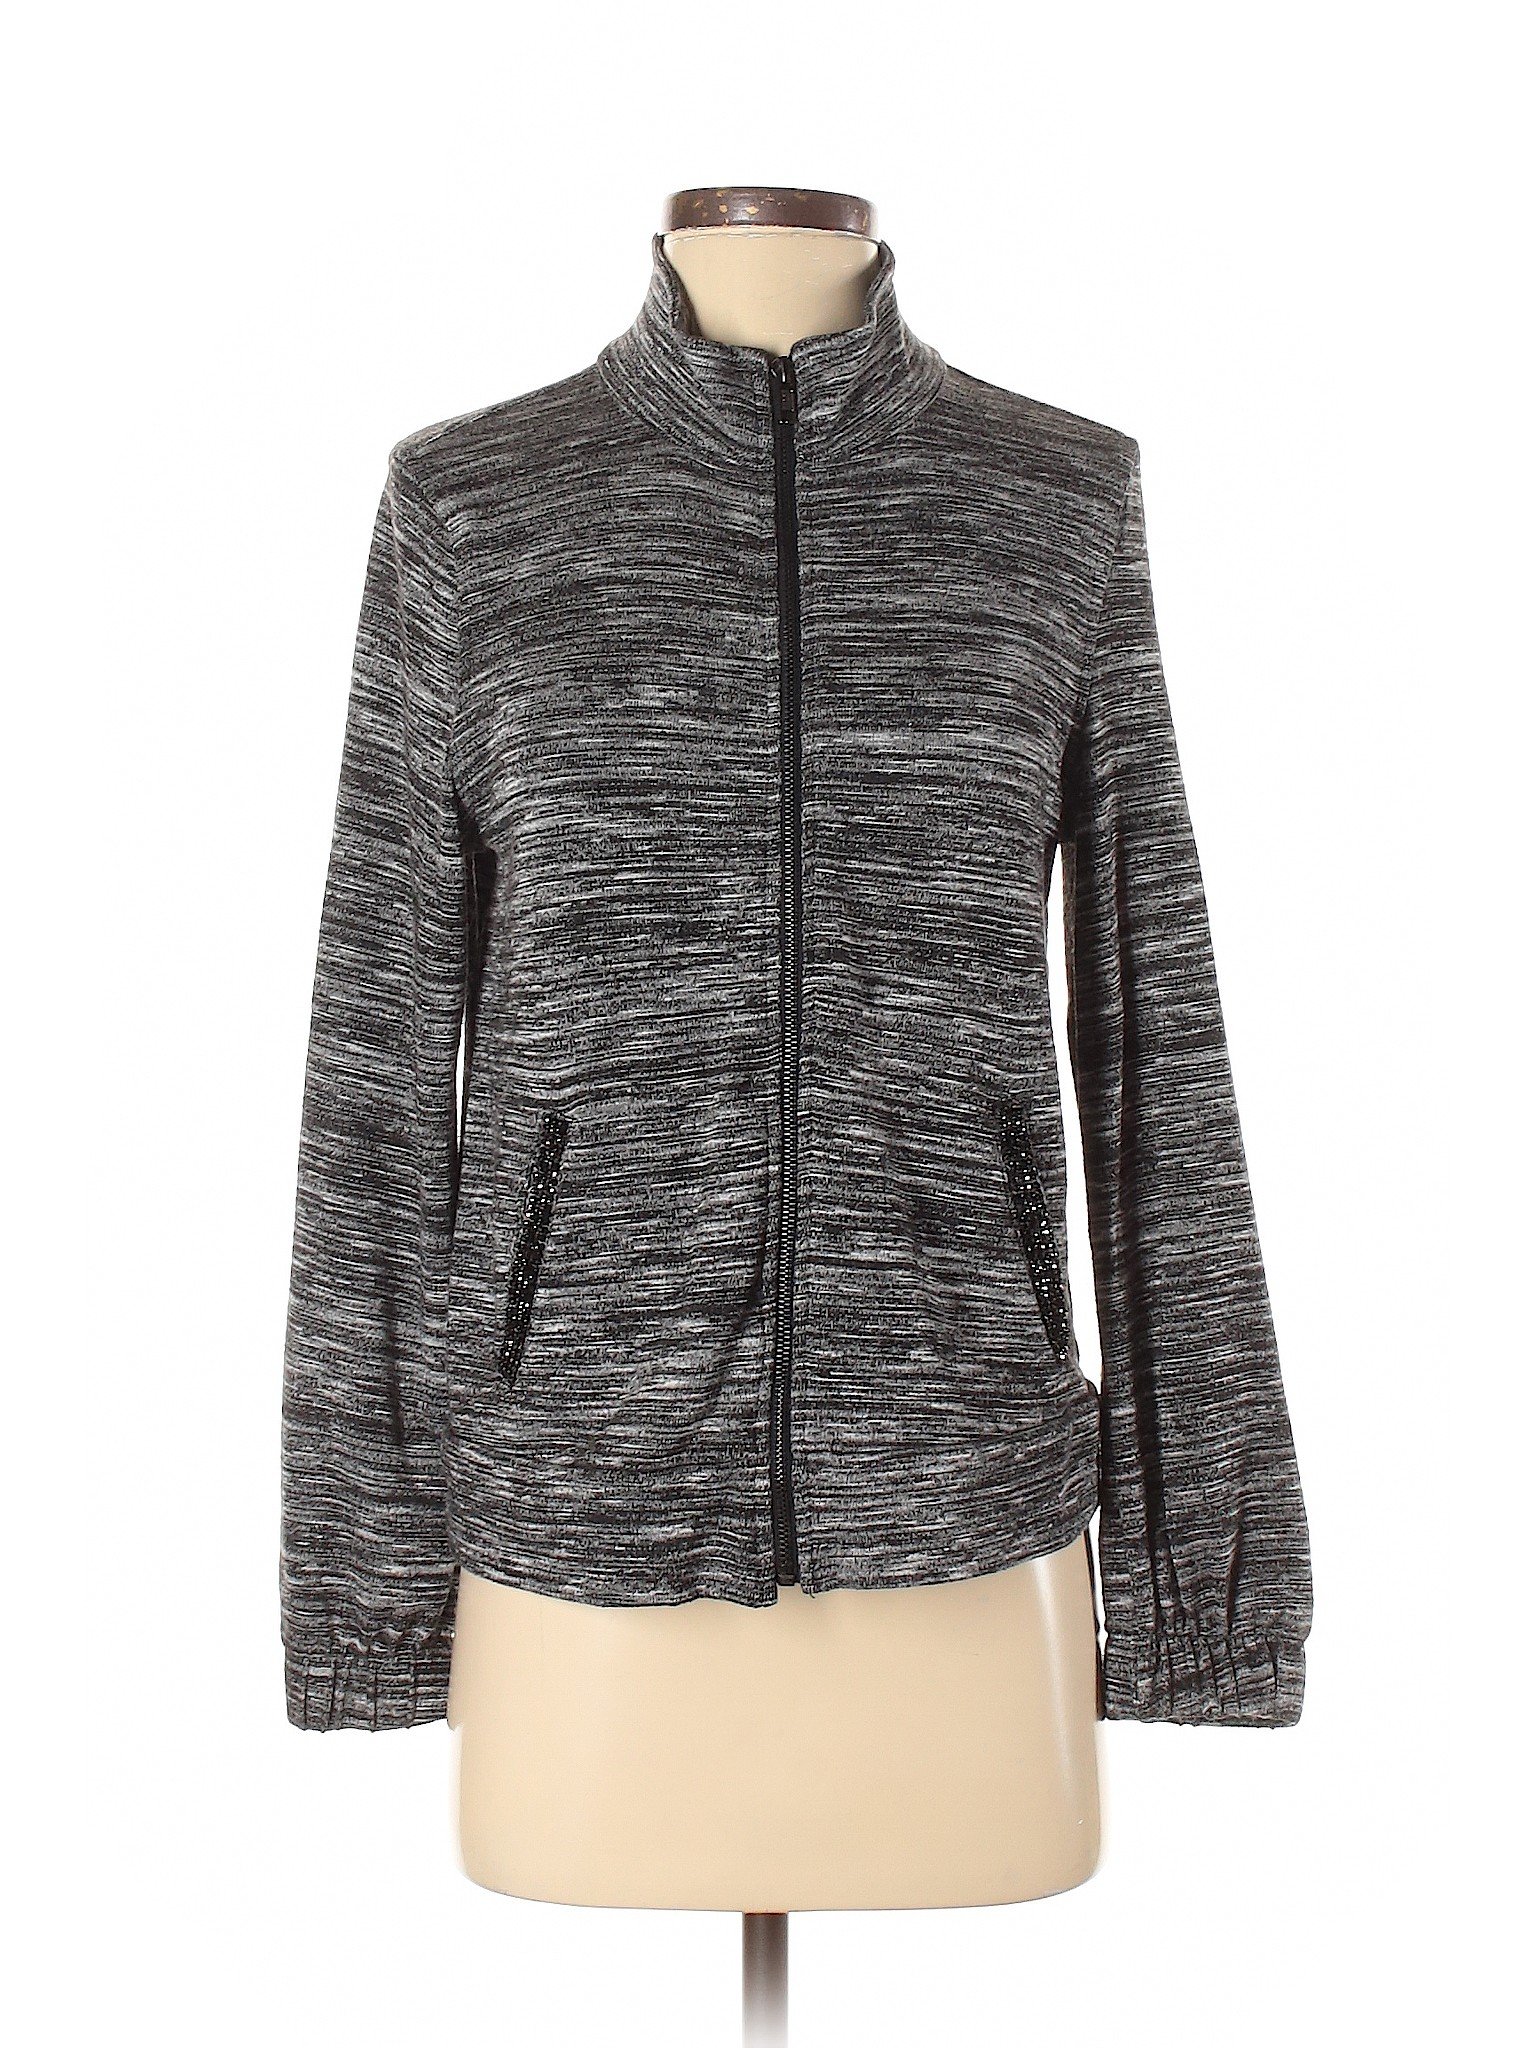 Juicy Couture Women Gray Jacket XS | eBay